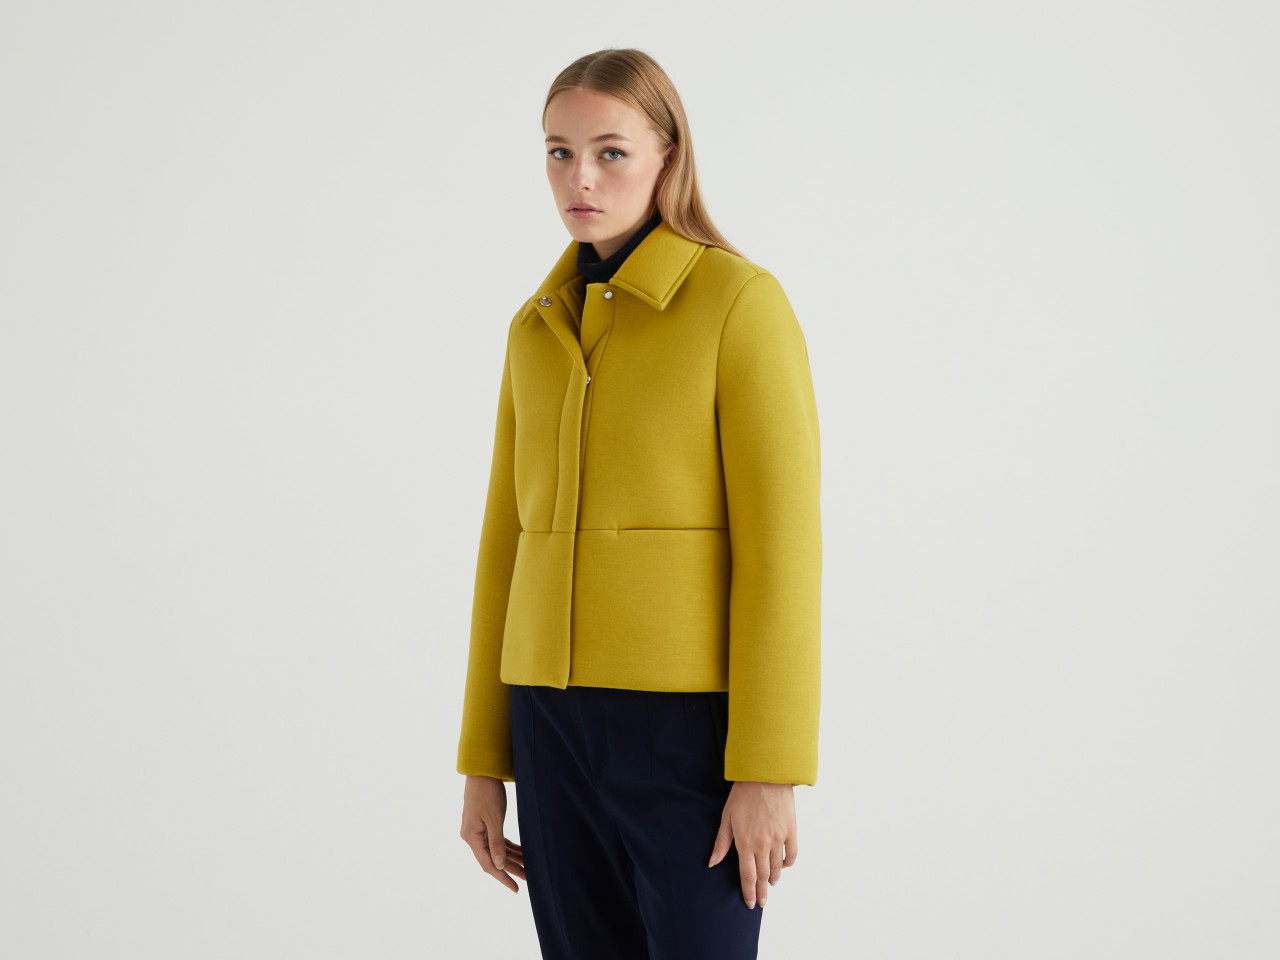 discount 53% Gray S Benetton light jacket WOMEN FASHION Jackets Light jacket Knitted 